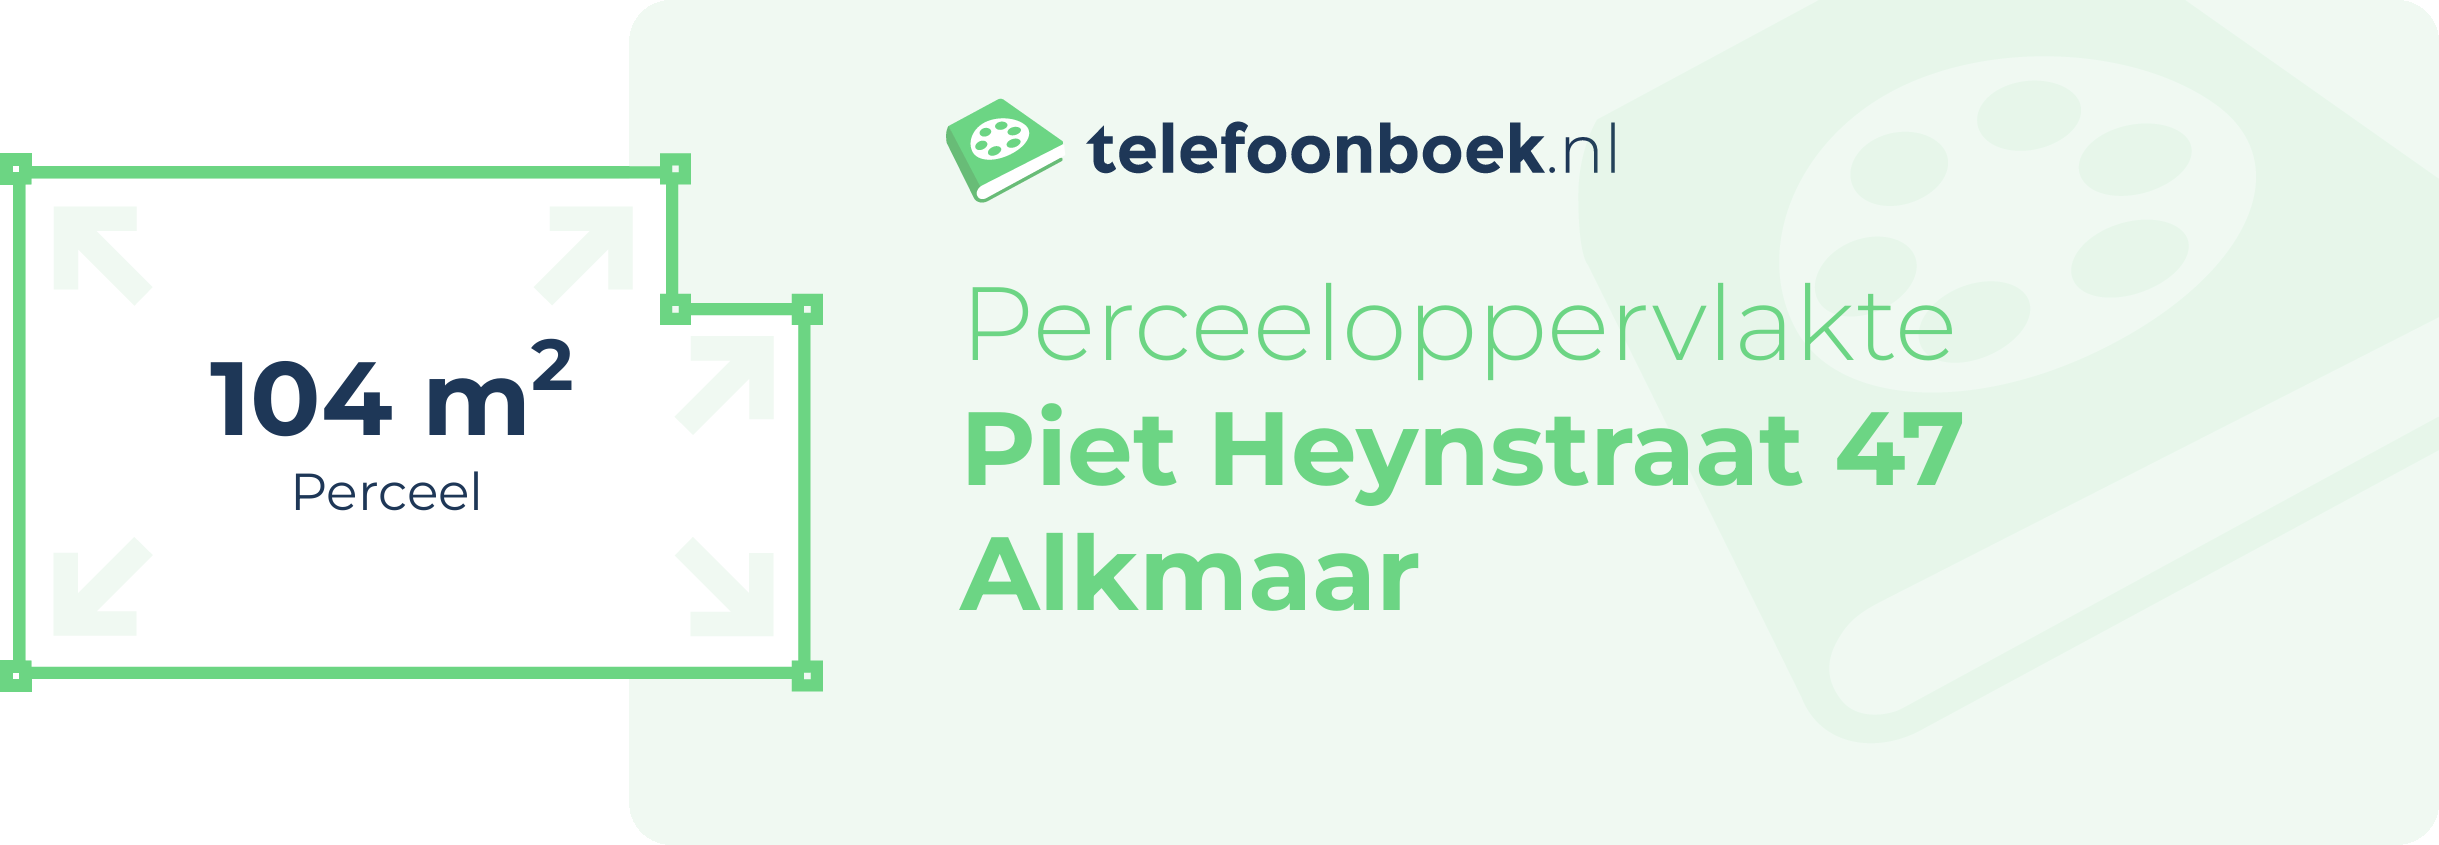 Perceeloppervlakte Piet Heynstraat 47 Alkmaar